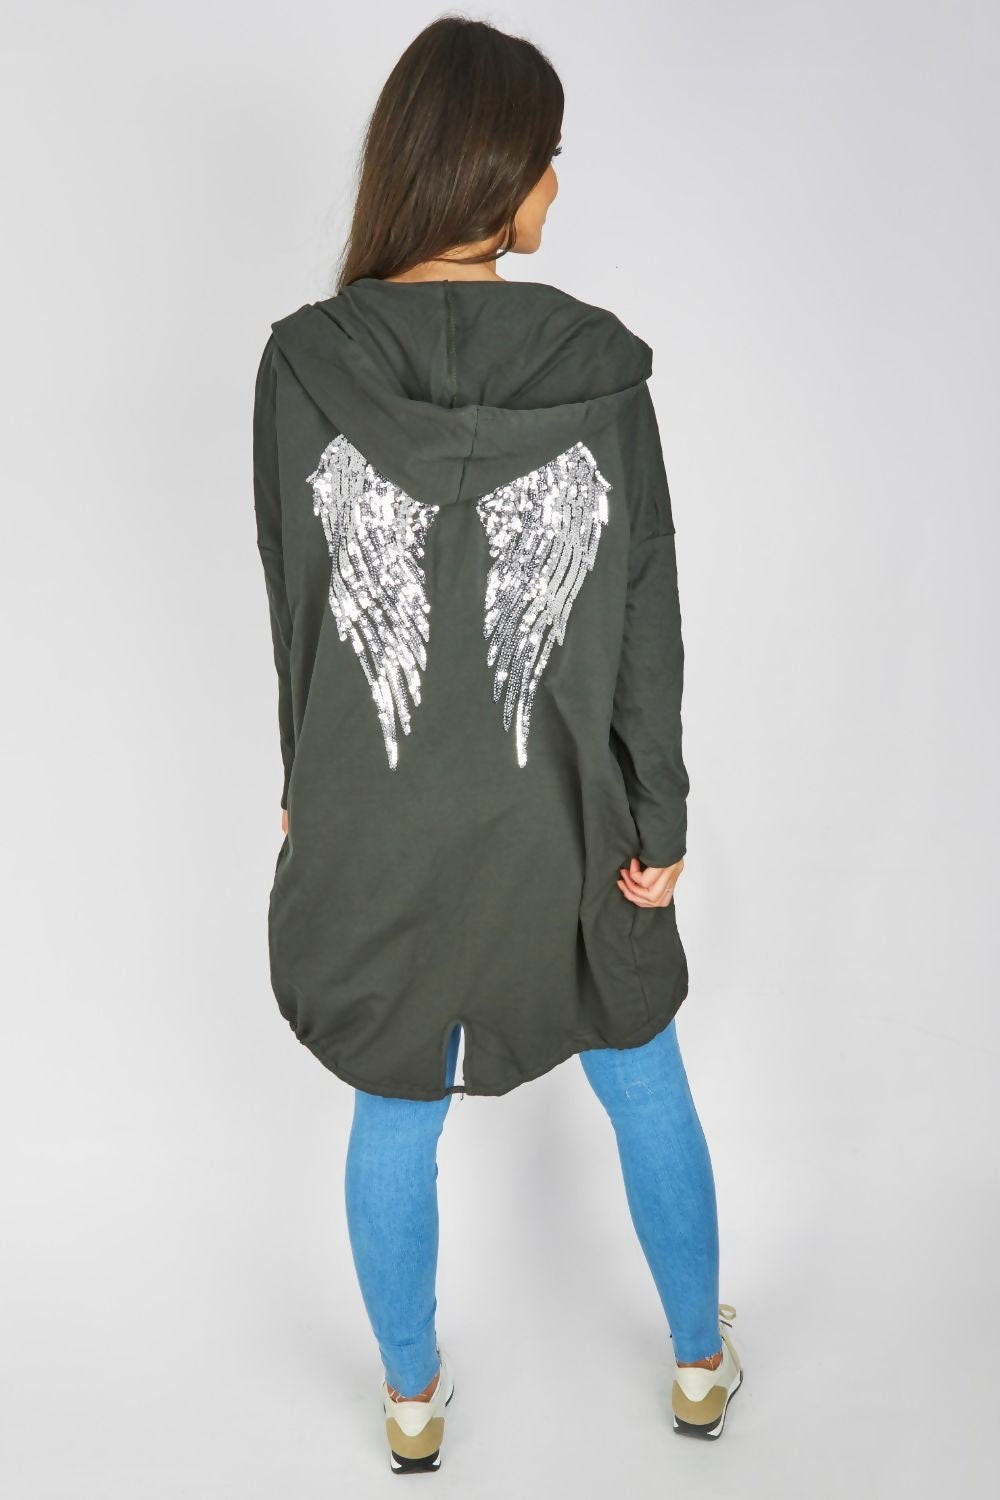 New Ladies Sequin Angel Wings Back Over-sized Hoodie Jacket Coat Cardigan 8-20 